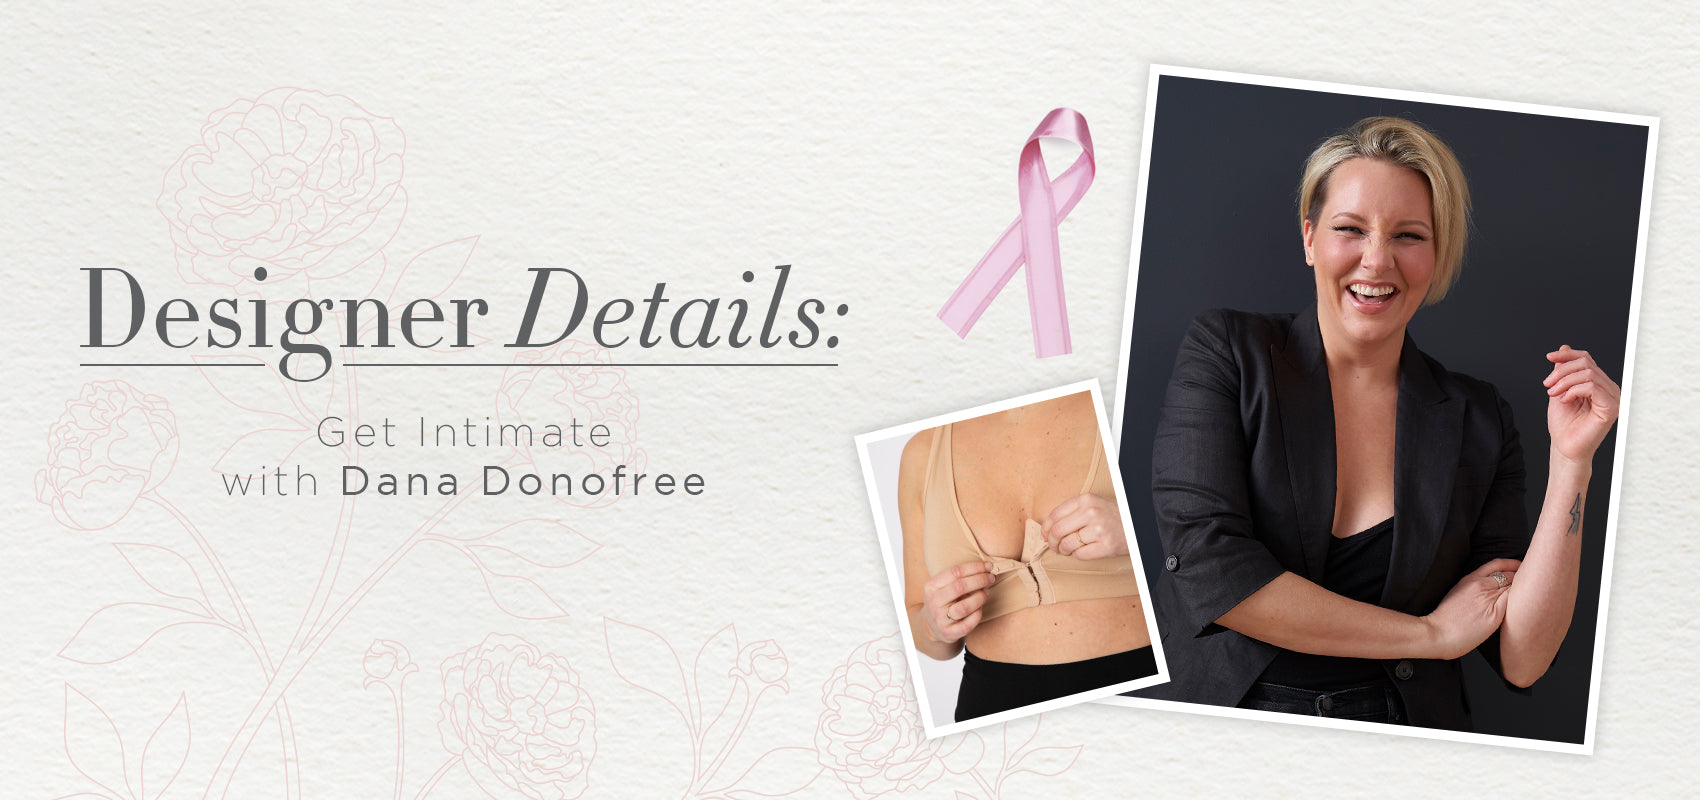 Designer Details: Get Intimate with Dana Donofree